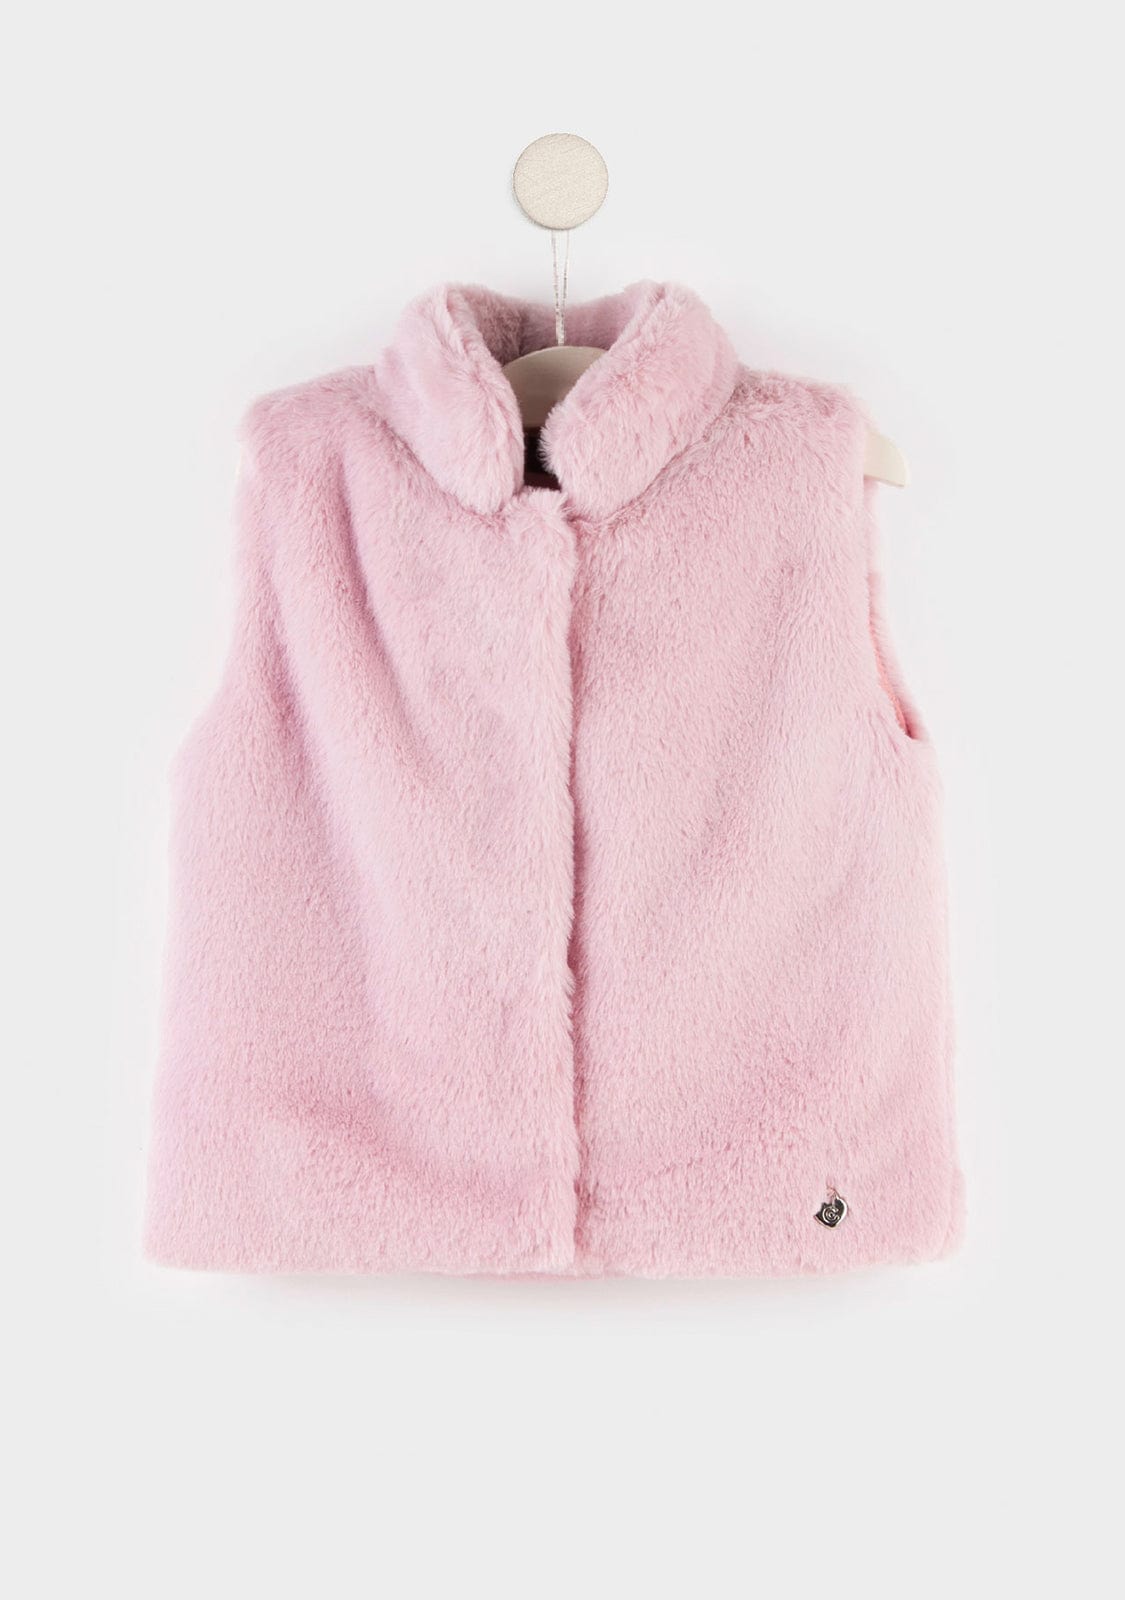 CONGUITOS TEXTIL Clothing Girl's Pink Fur Vest